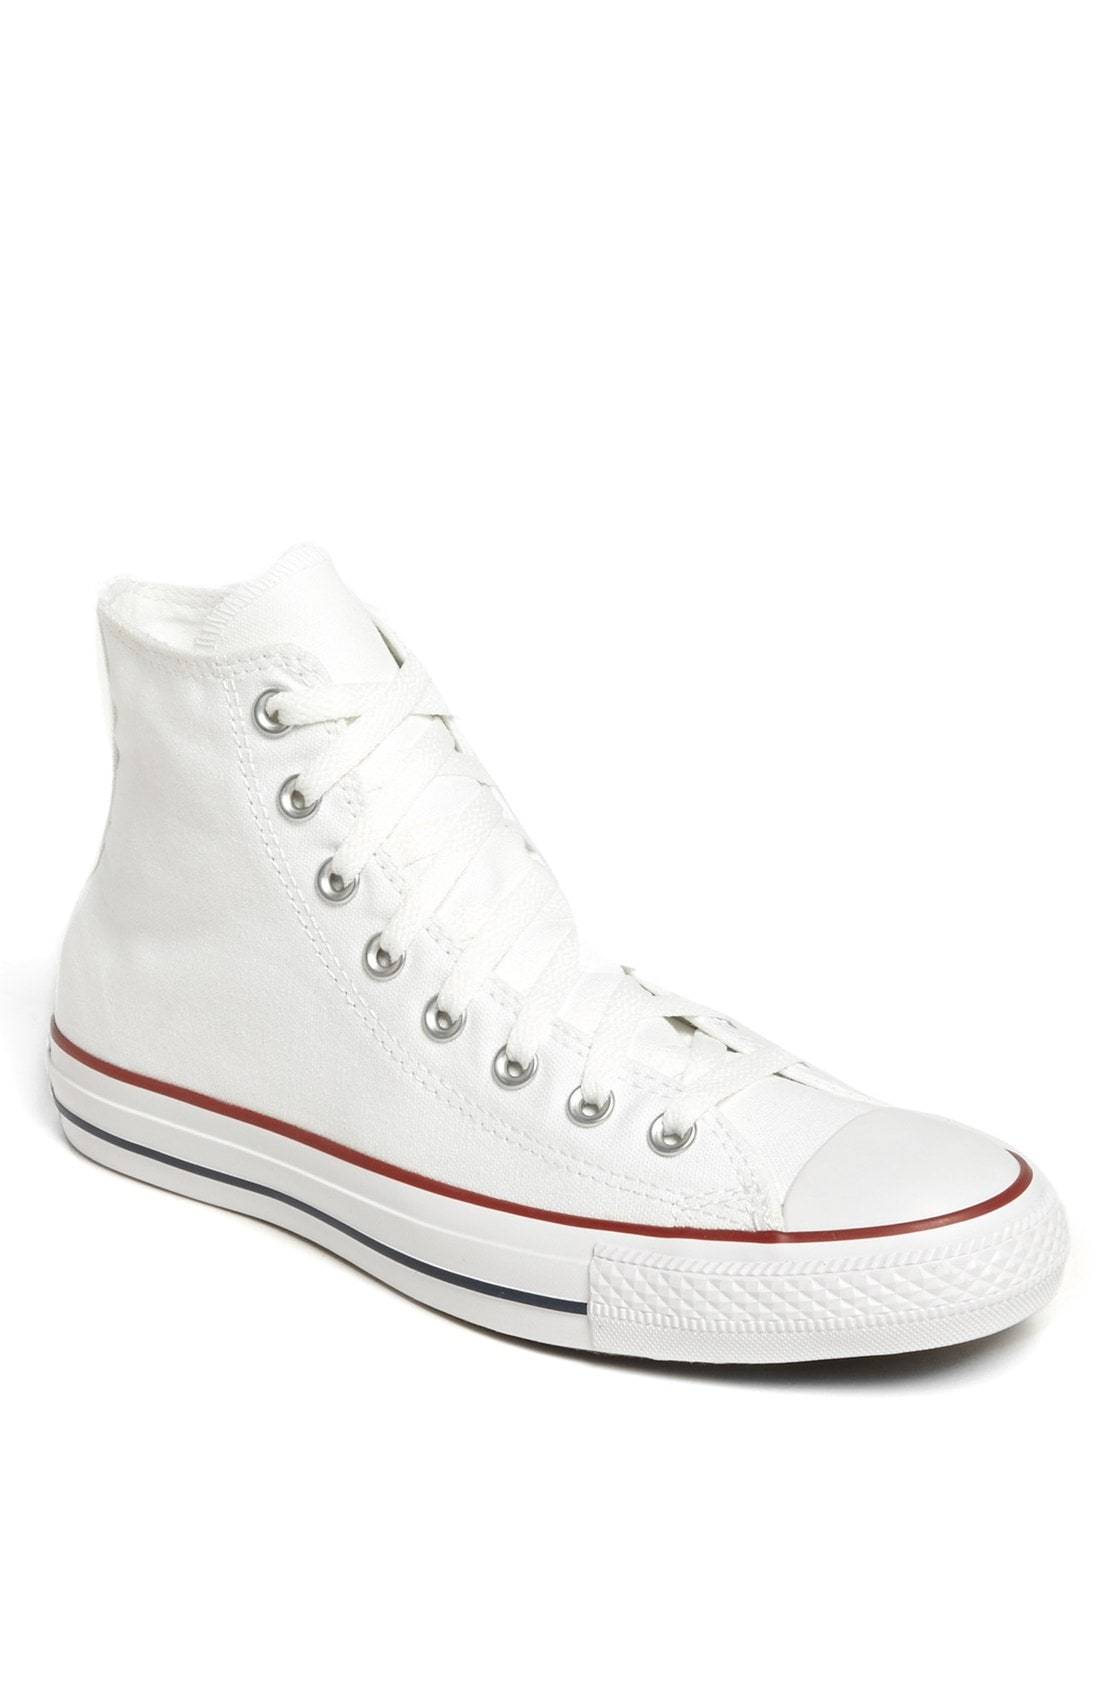 Nordstrom x Converse Converse Chuck Taylor High Top Sneaker, $55 | Nordstrom  | Lookastic